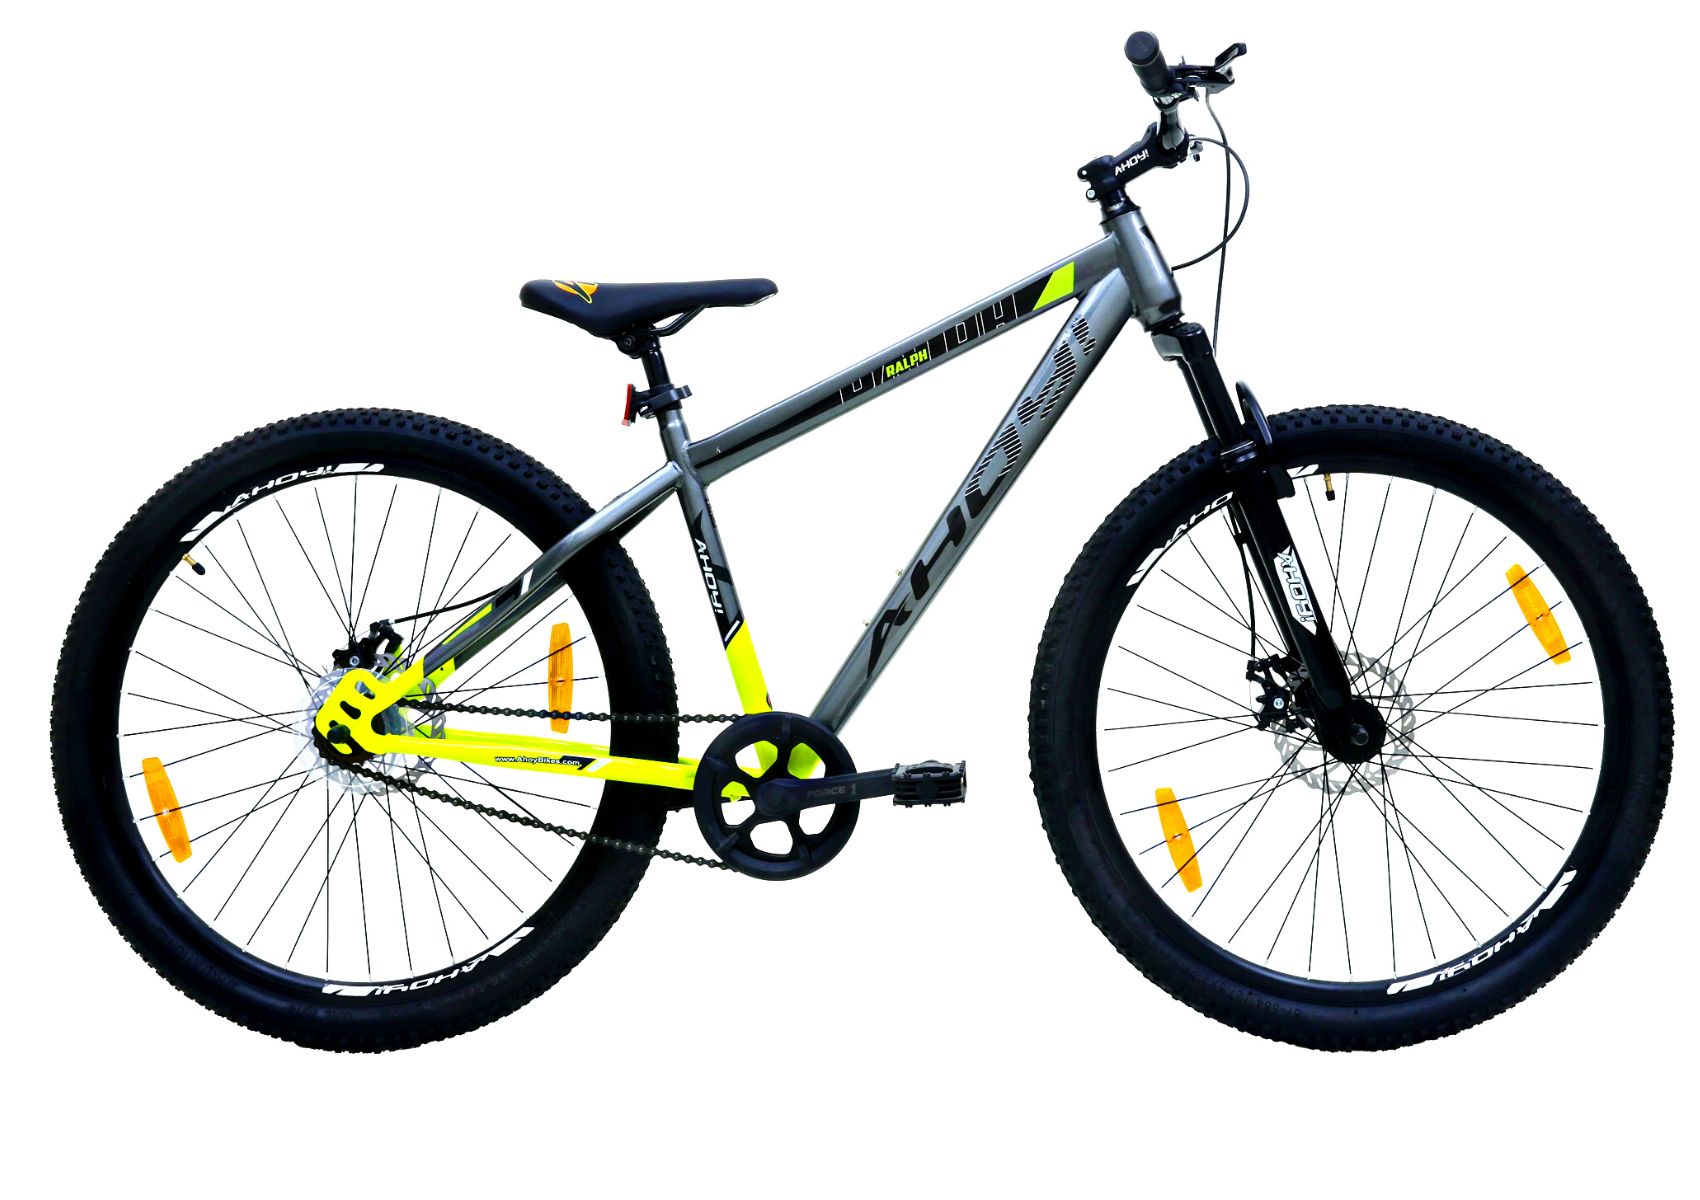 Ralph Non Gear Bike 27.5T | Buy Yellow Non Gear Cycle for Men